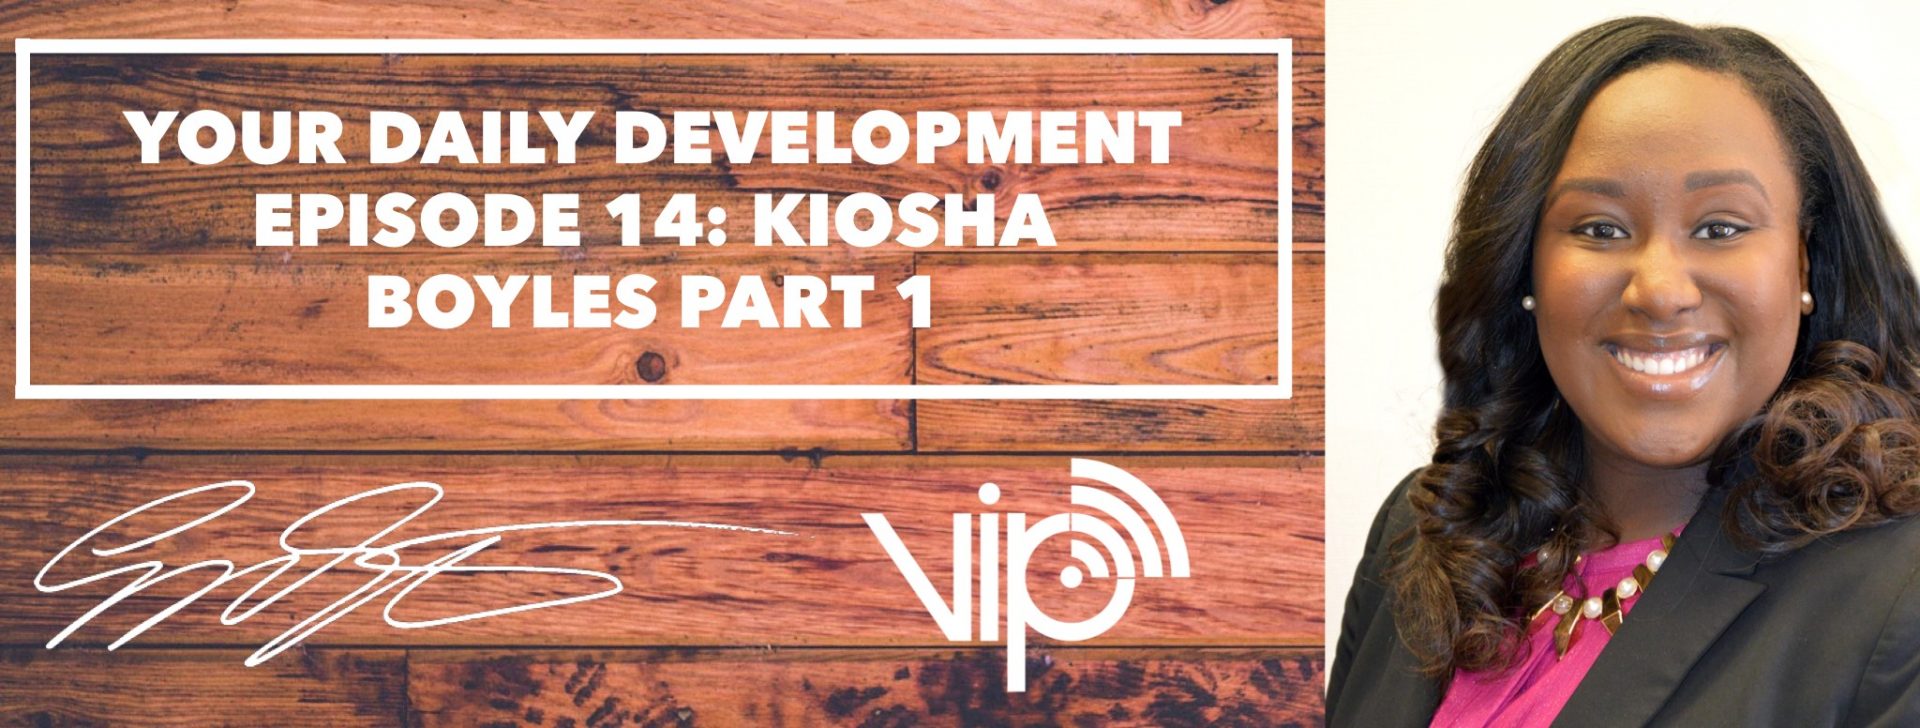 Your Daily Development: Episode 14 Kiosha Boyles Part 1 of 2 